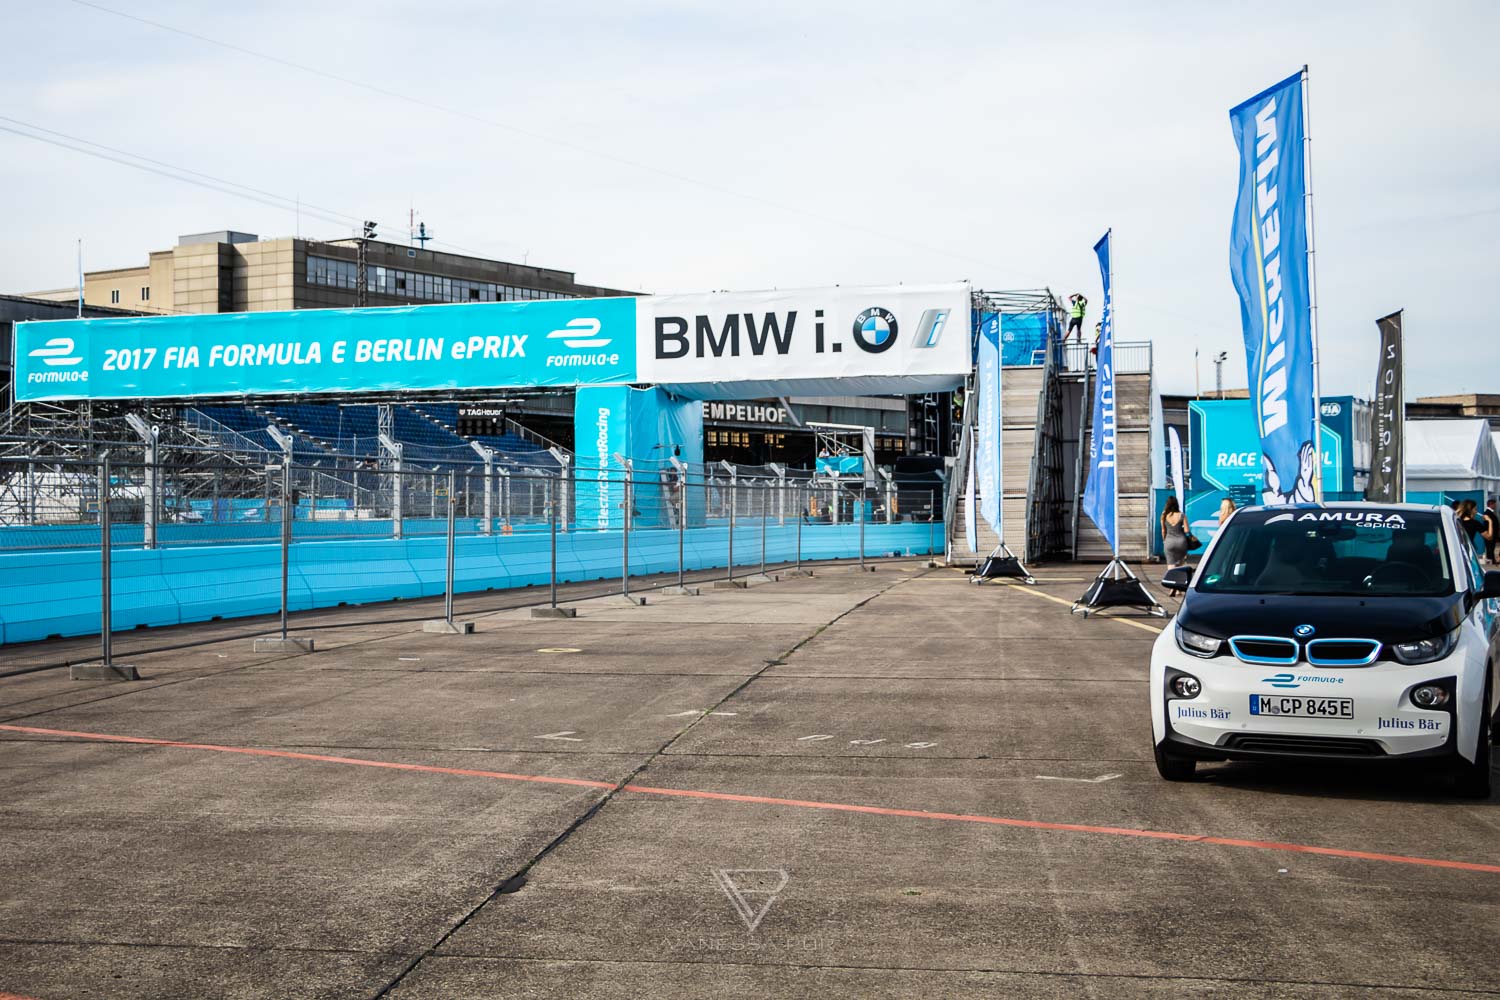 BMW i8 driving experience on the Formula E race track in Berlin - Race Track & Driving Experience - HarmanKardon GetElectrified Formula E Grand Prix Berlin - BMW Motorsport Event and Driving Experience with BMW i8 ECar